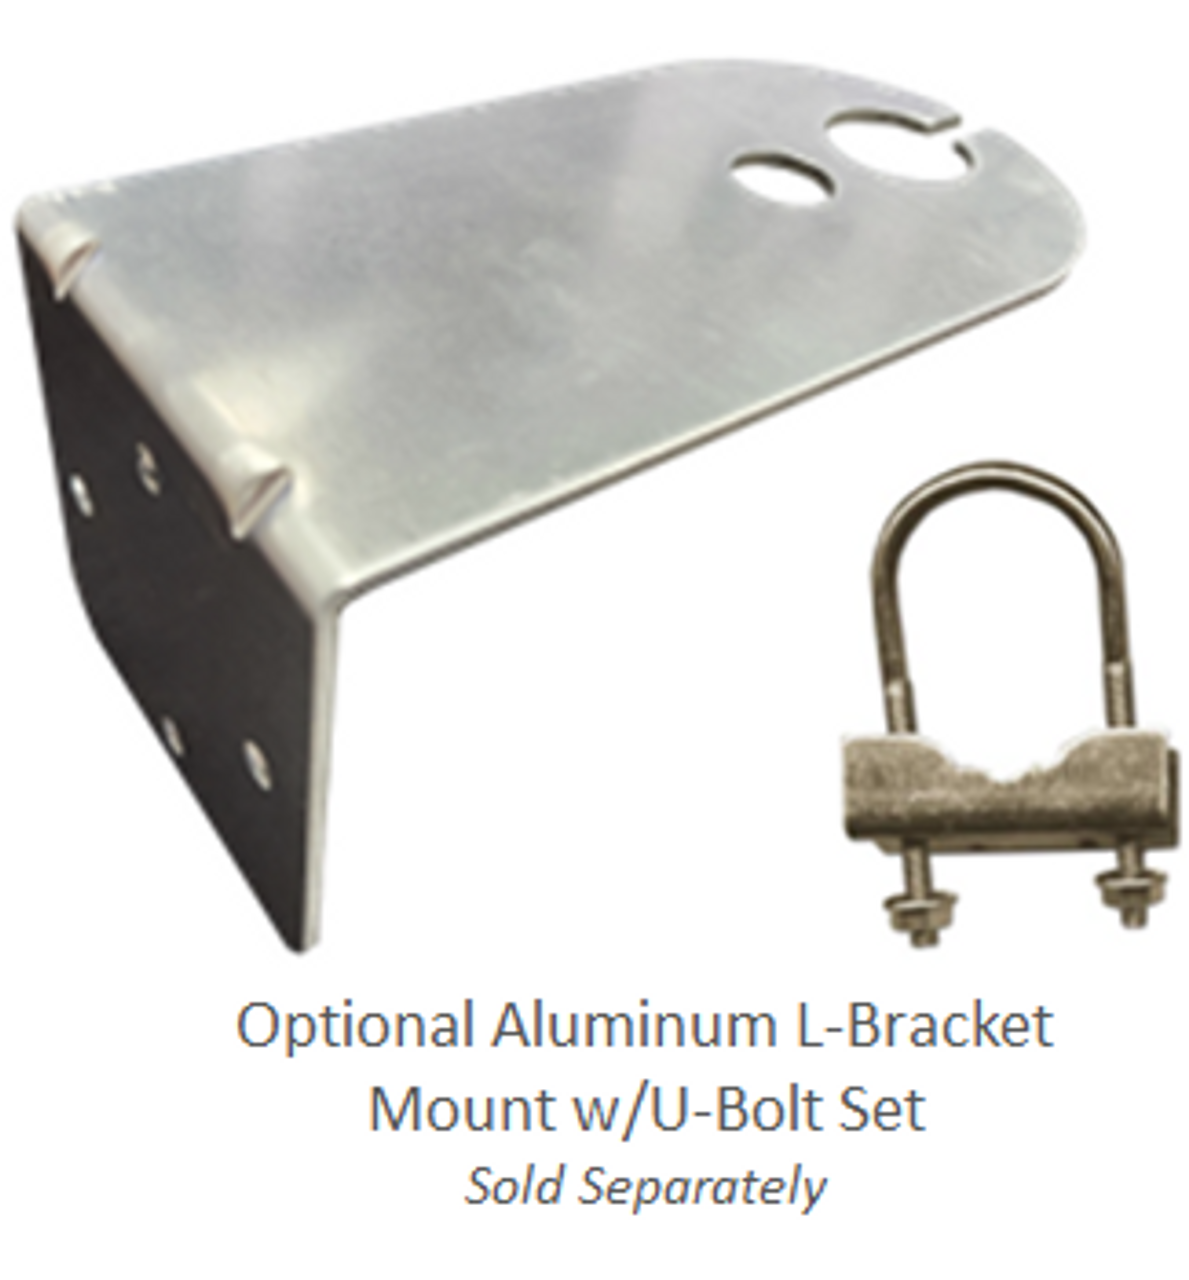 Optional L-Bracket Antenna Mount - Sold Separately